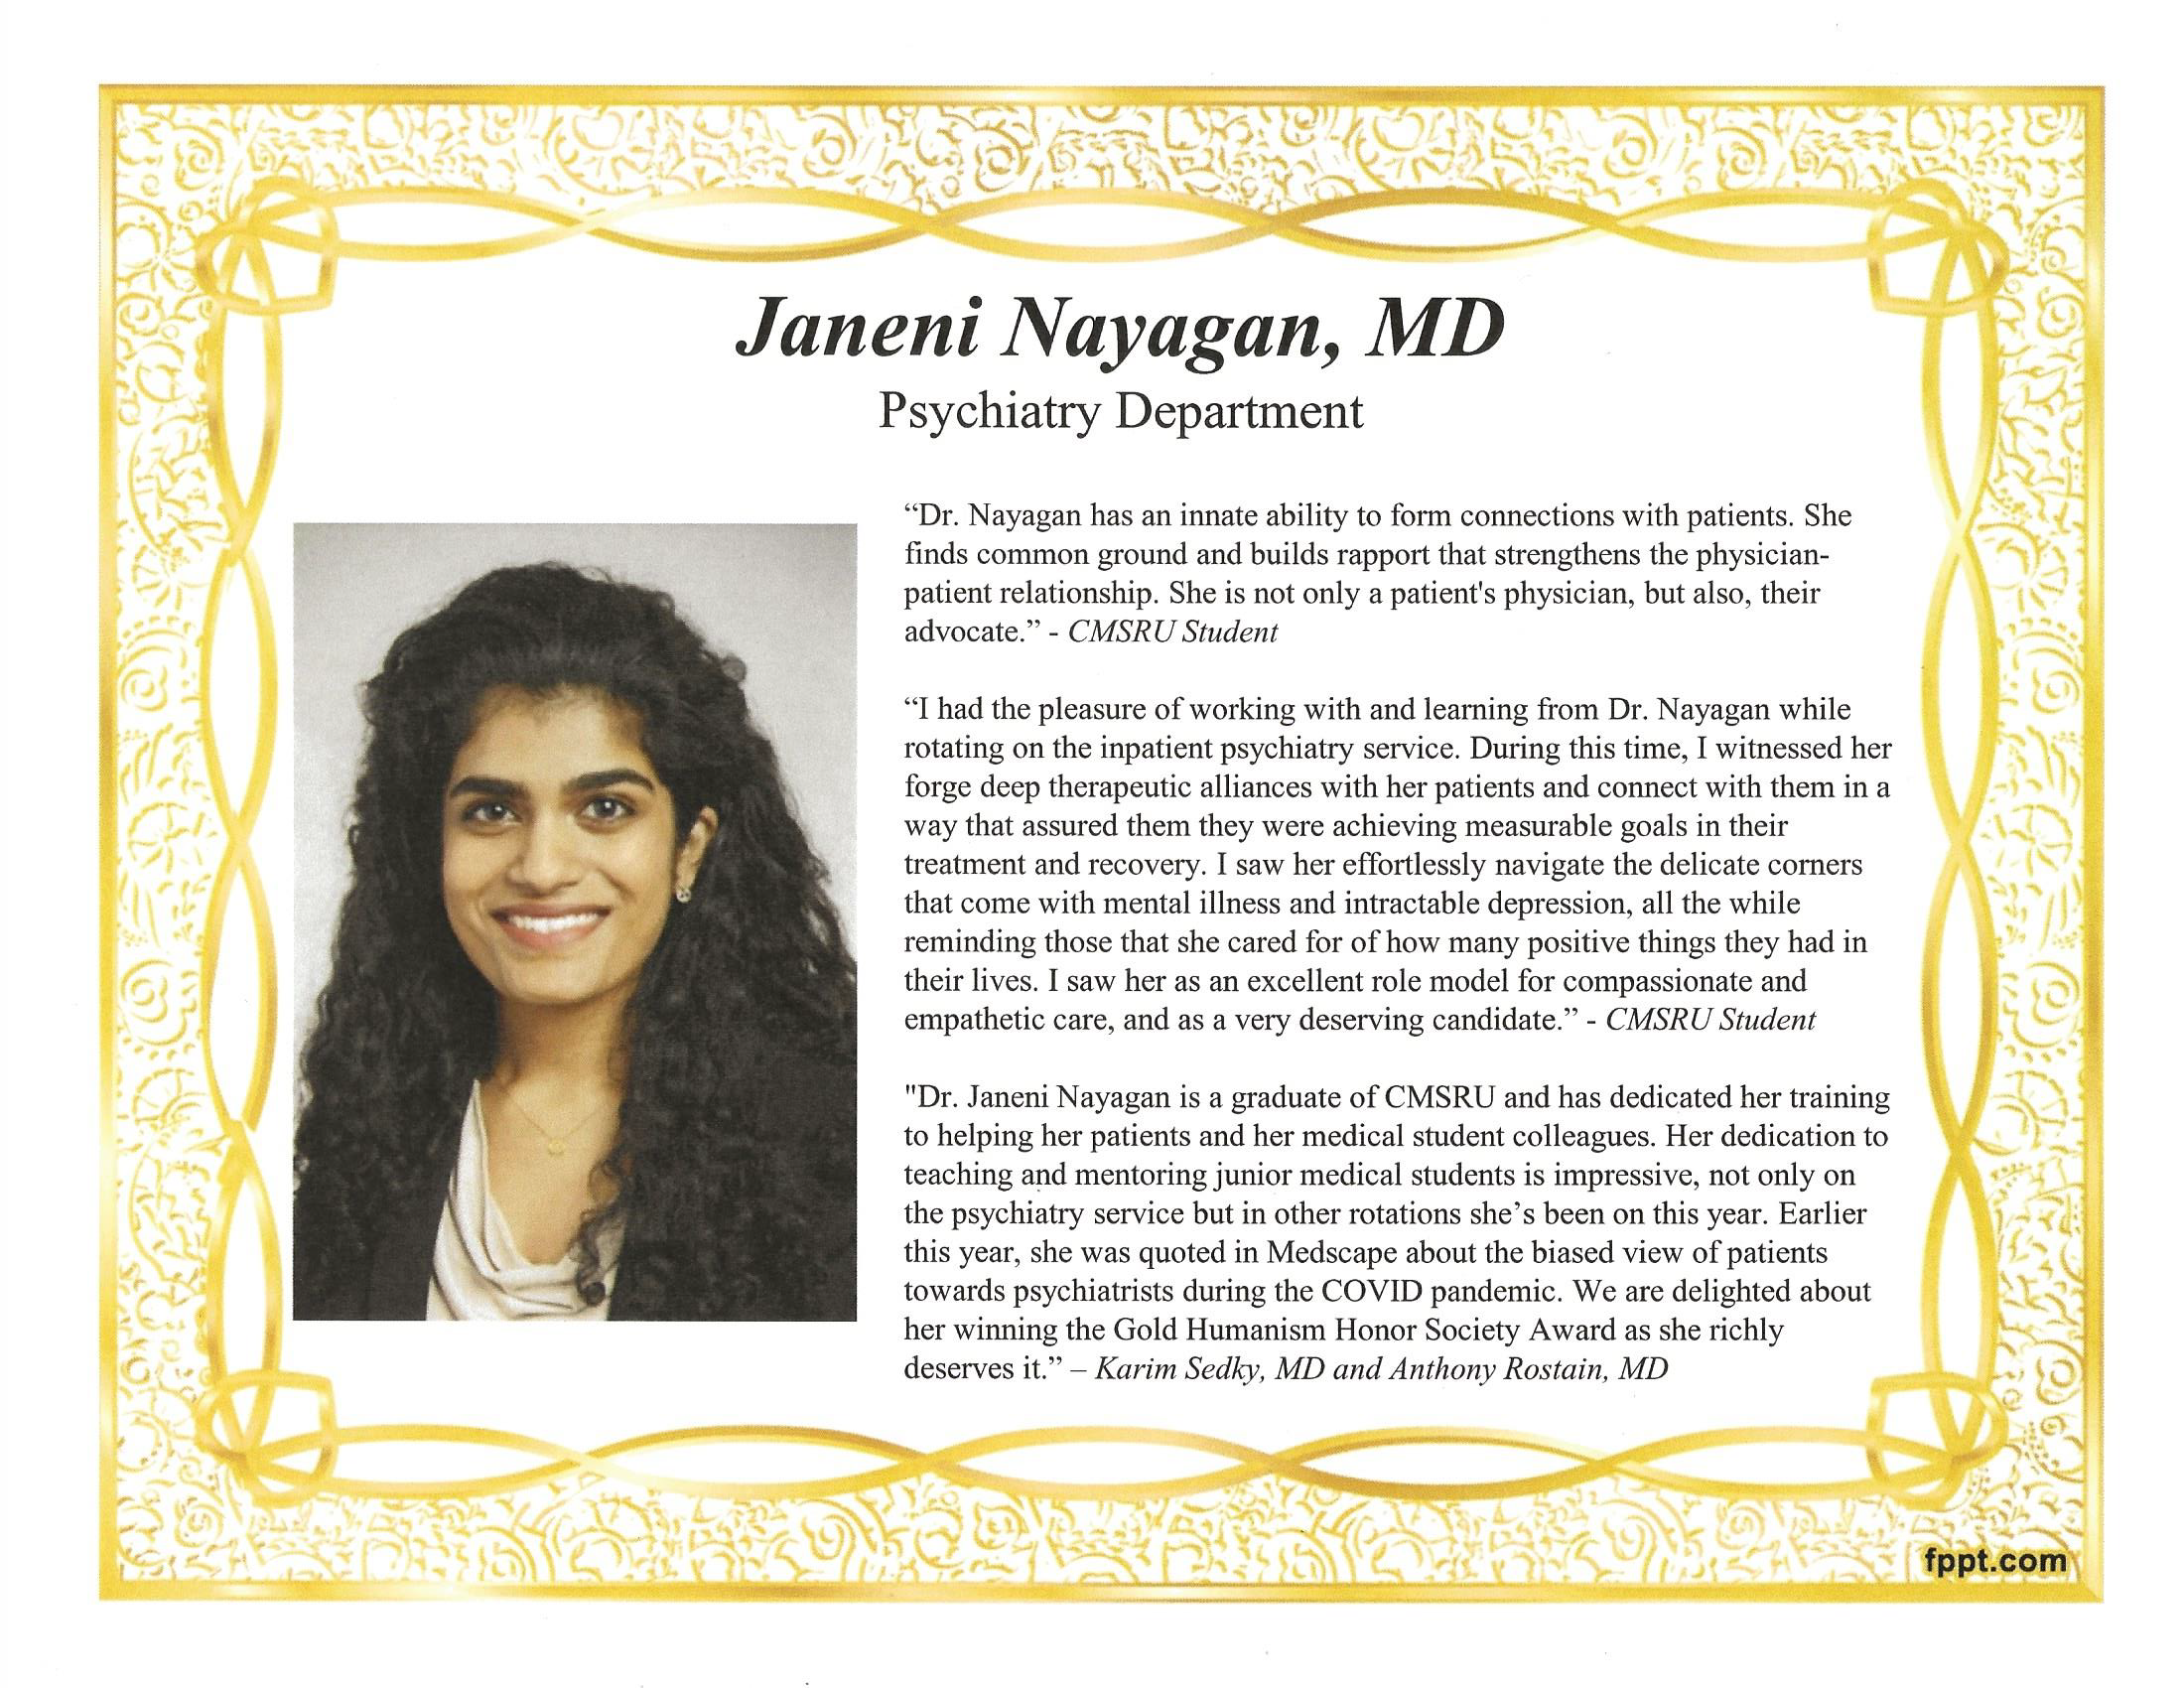 Gold Humanism Award to Janeni Nayagan,MD 